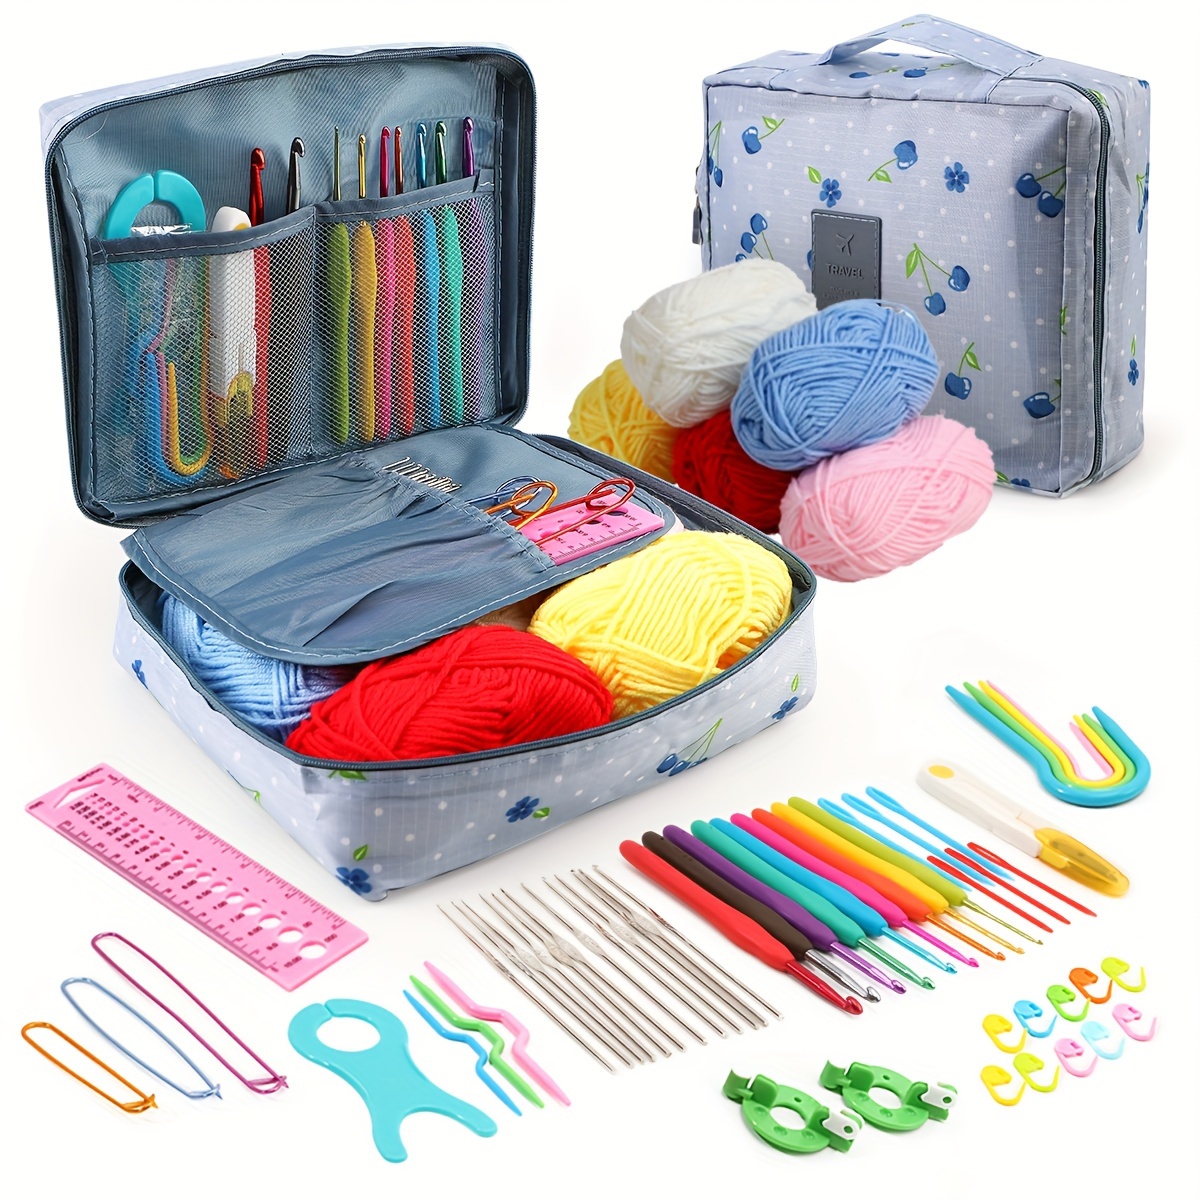 1 Set Crochet Hooks Kit Including 14pcs Long Crochet Hooks, Blunt Needles,  Stitch Markers, Storage Case, Crochet Accessories Kit